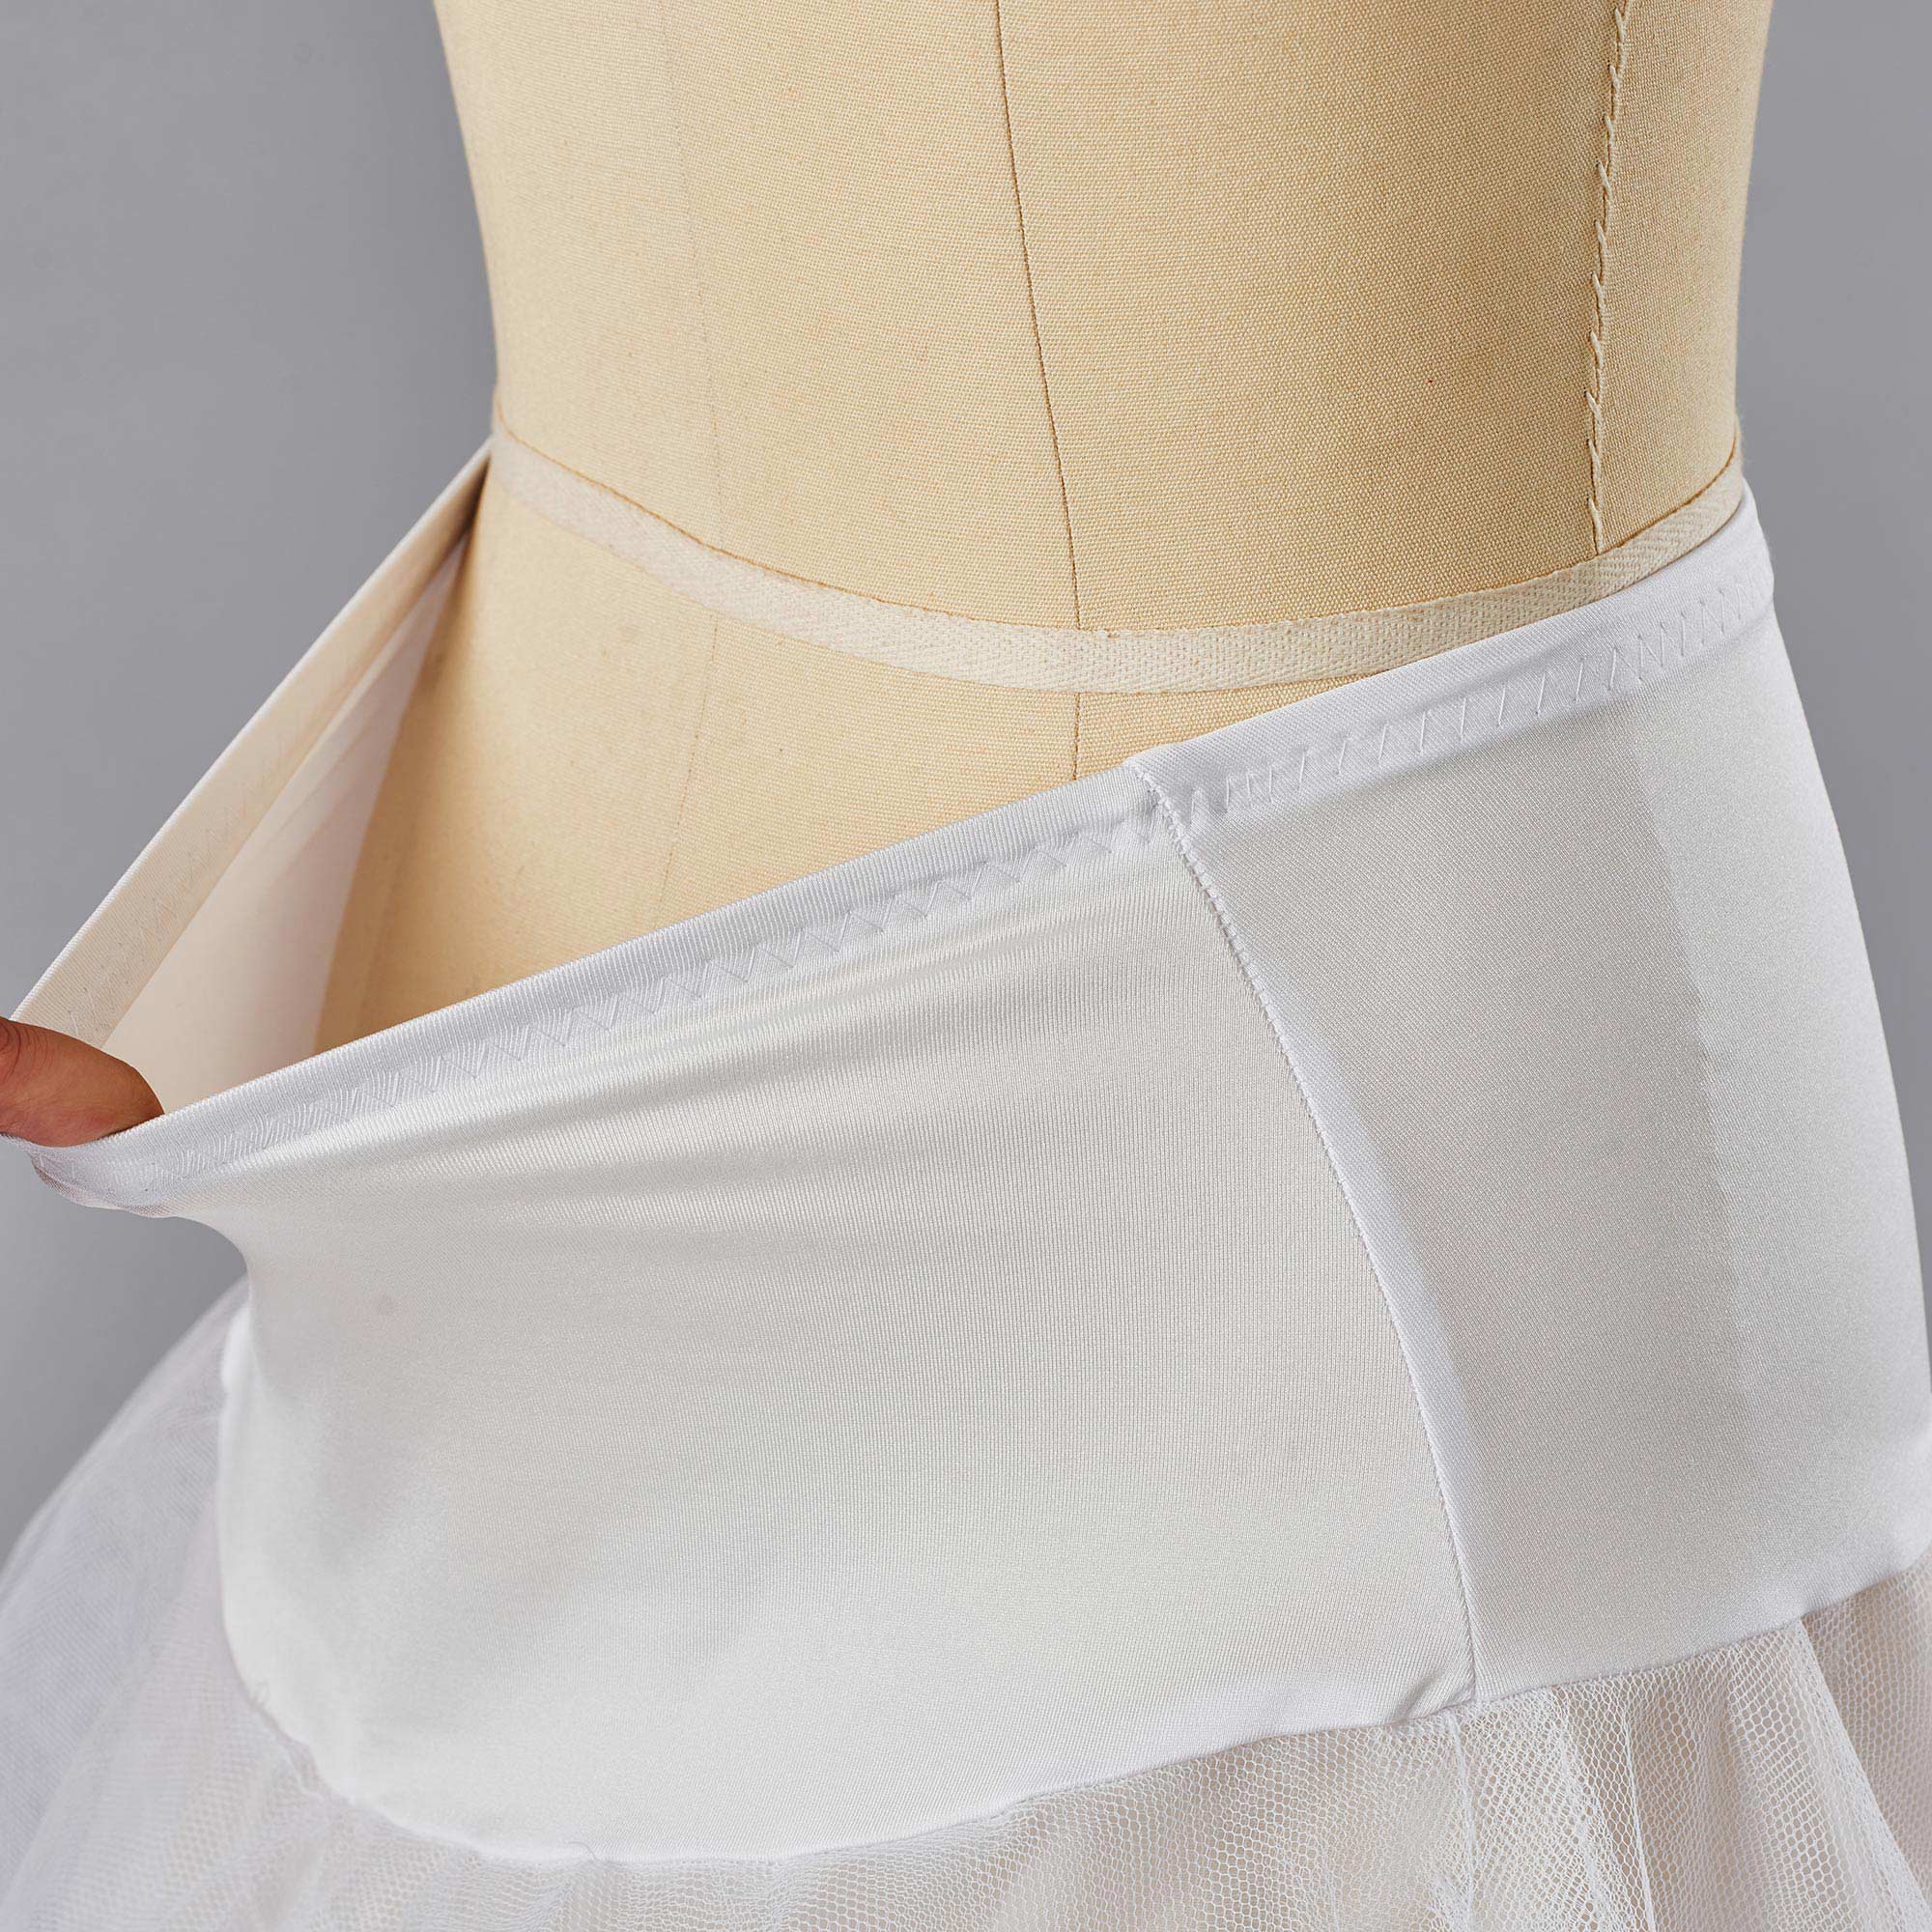 A-Line Style Wedding Petticoat